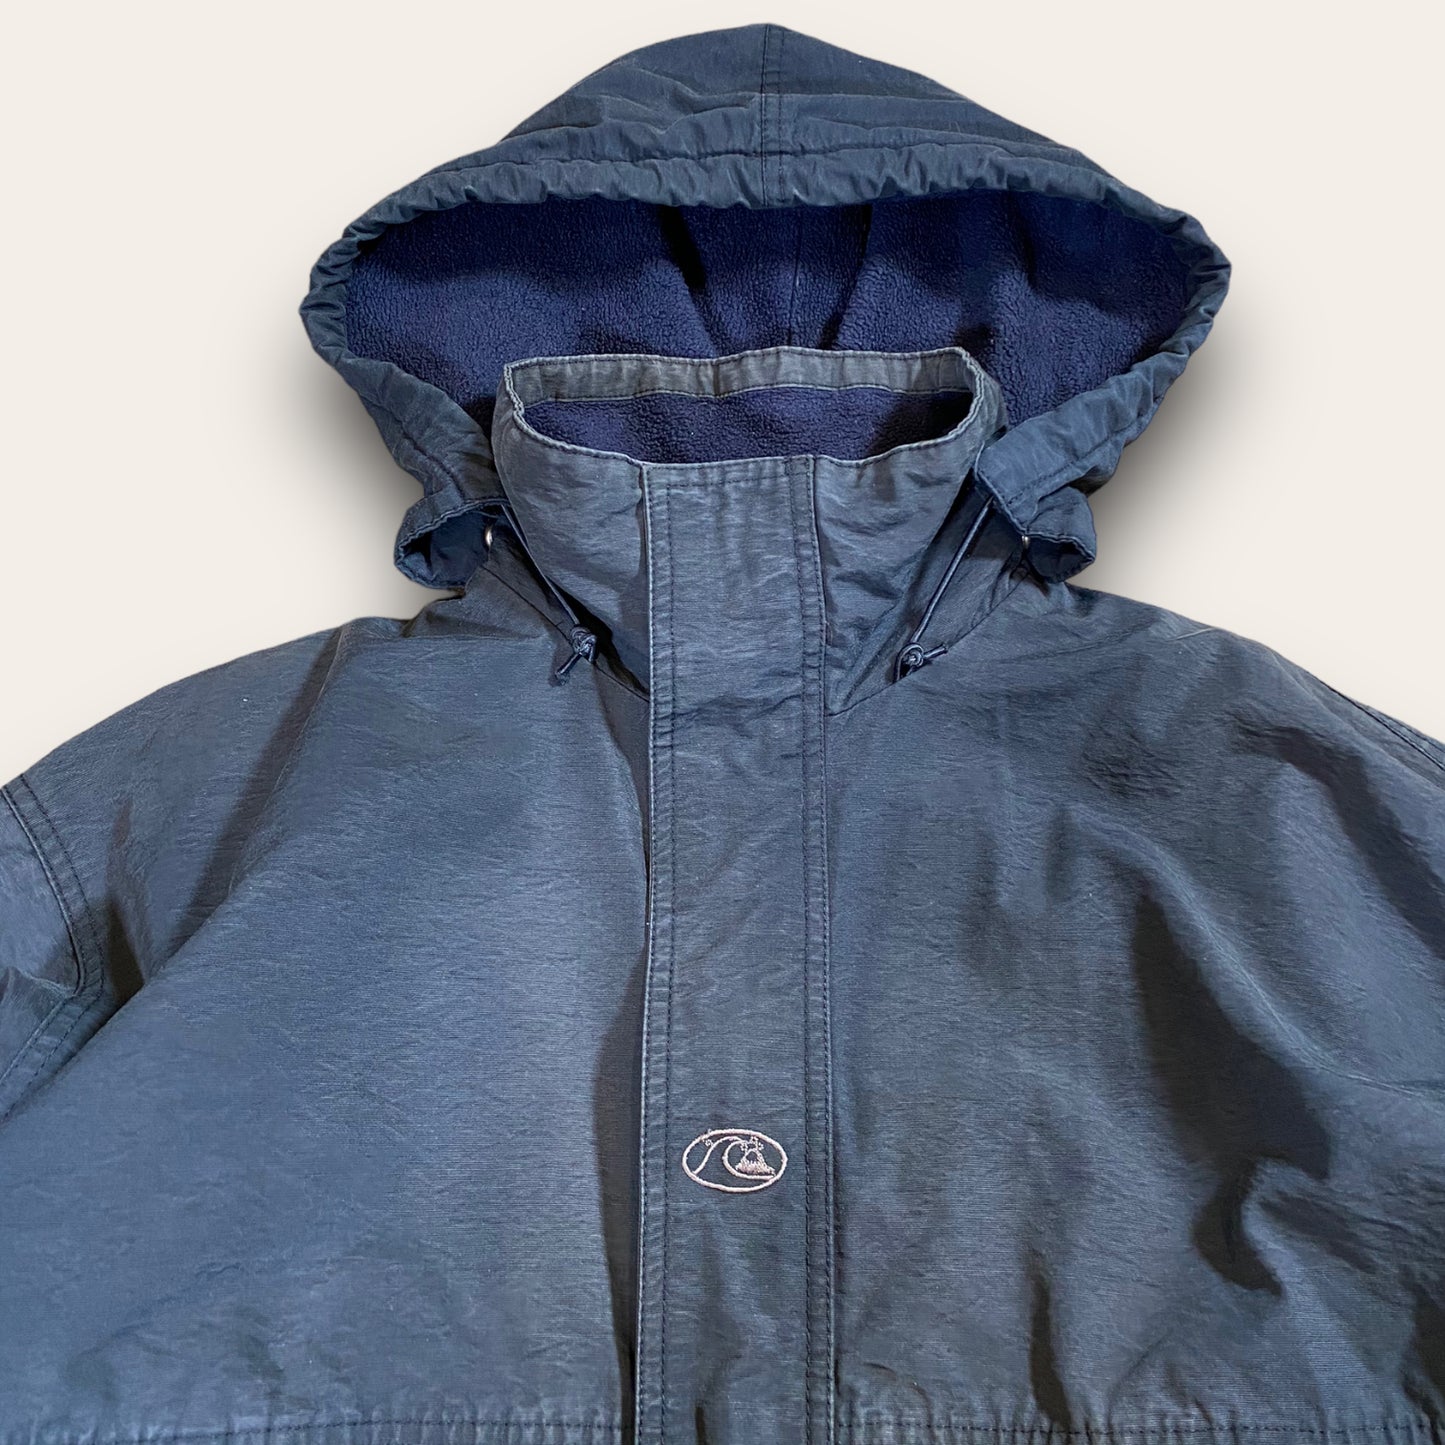 Quiksilver 90’s Silver Edition Fleece Lined Jacket L